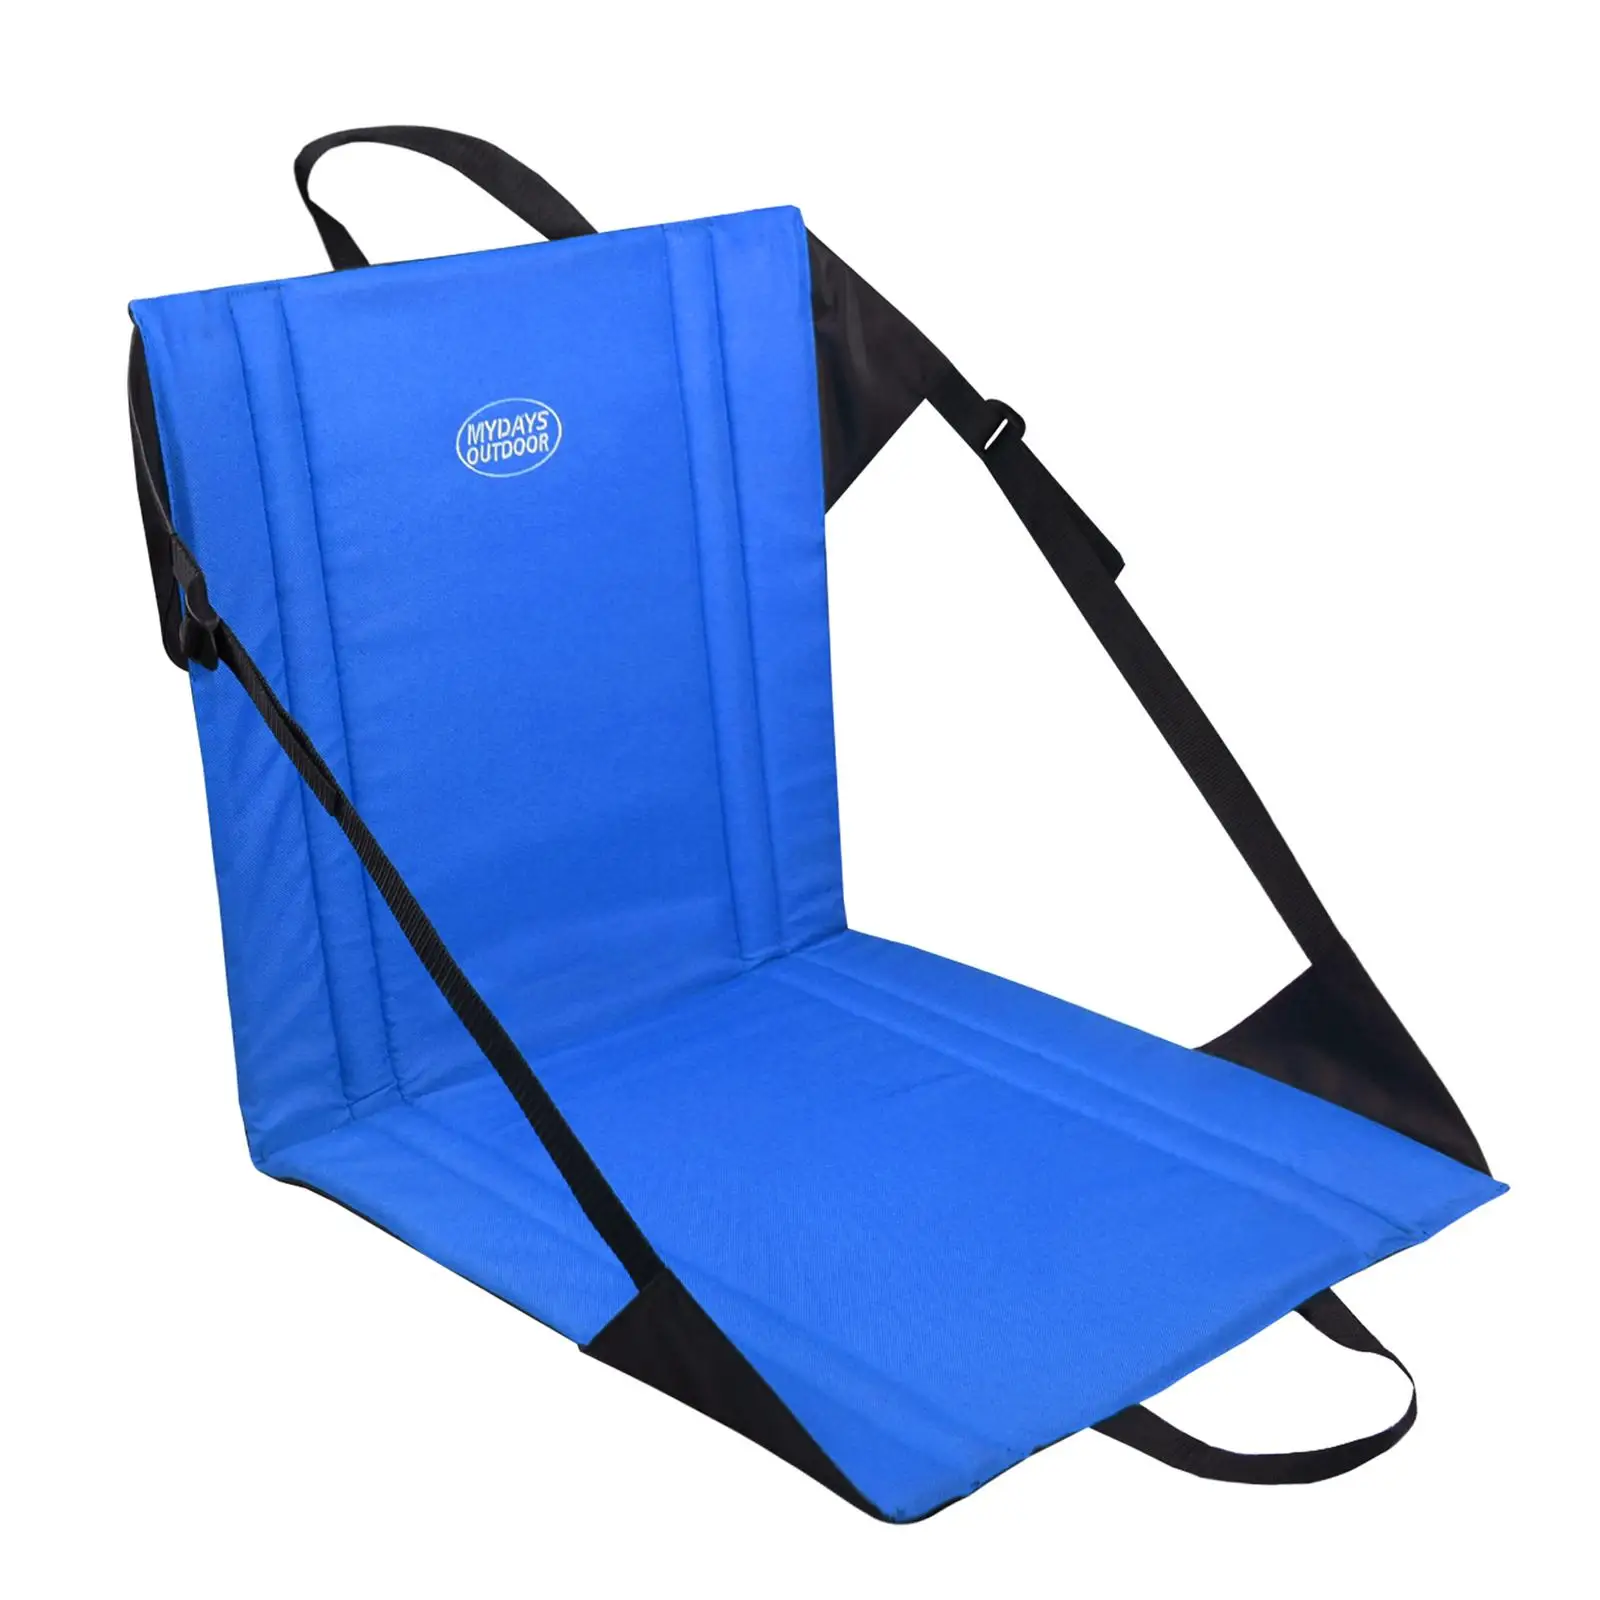 Portable Foldable Seat Cushion Padded Seat Folding Chair Sitting Mat Picnic Pad